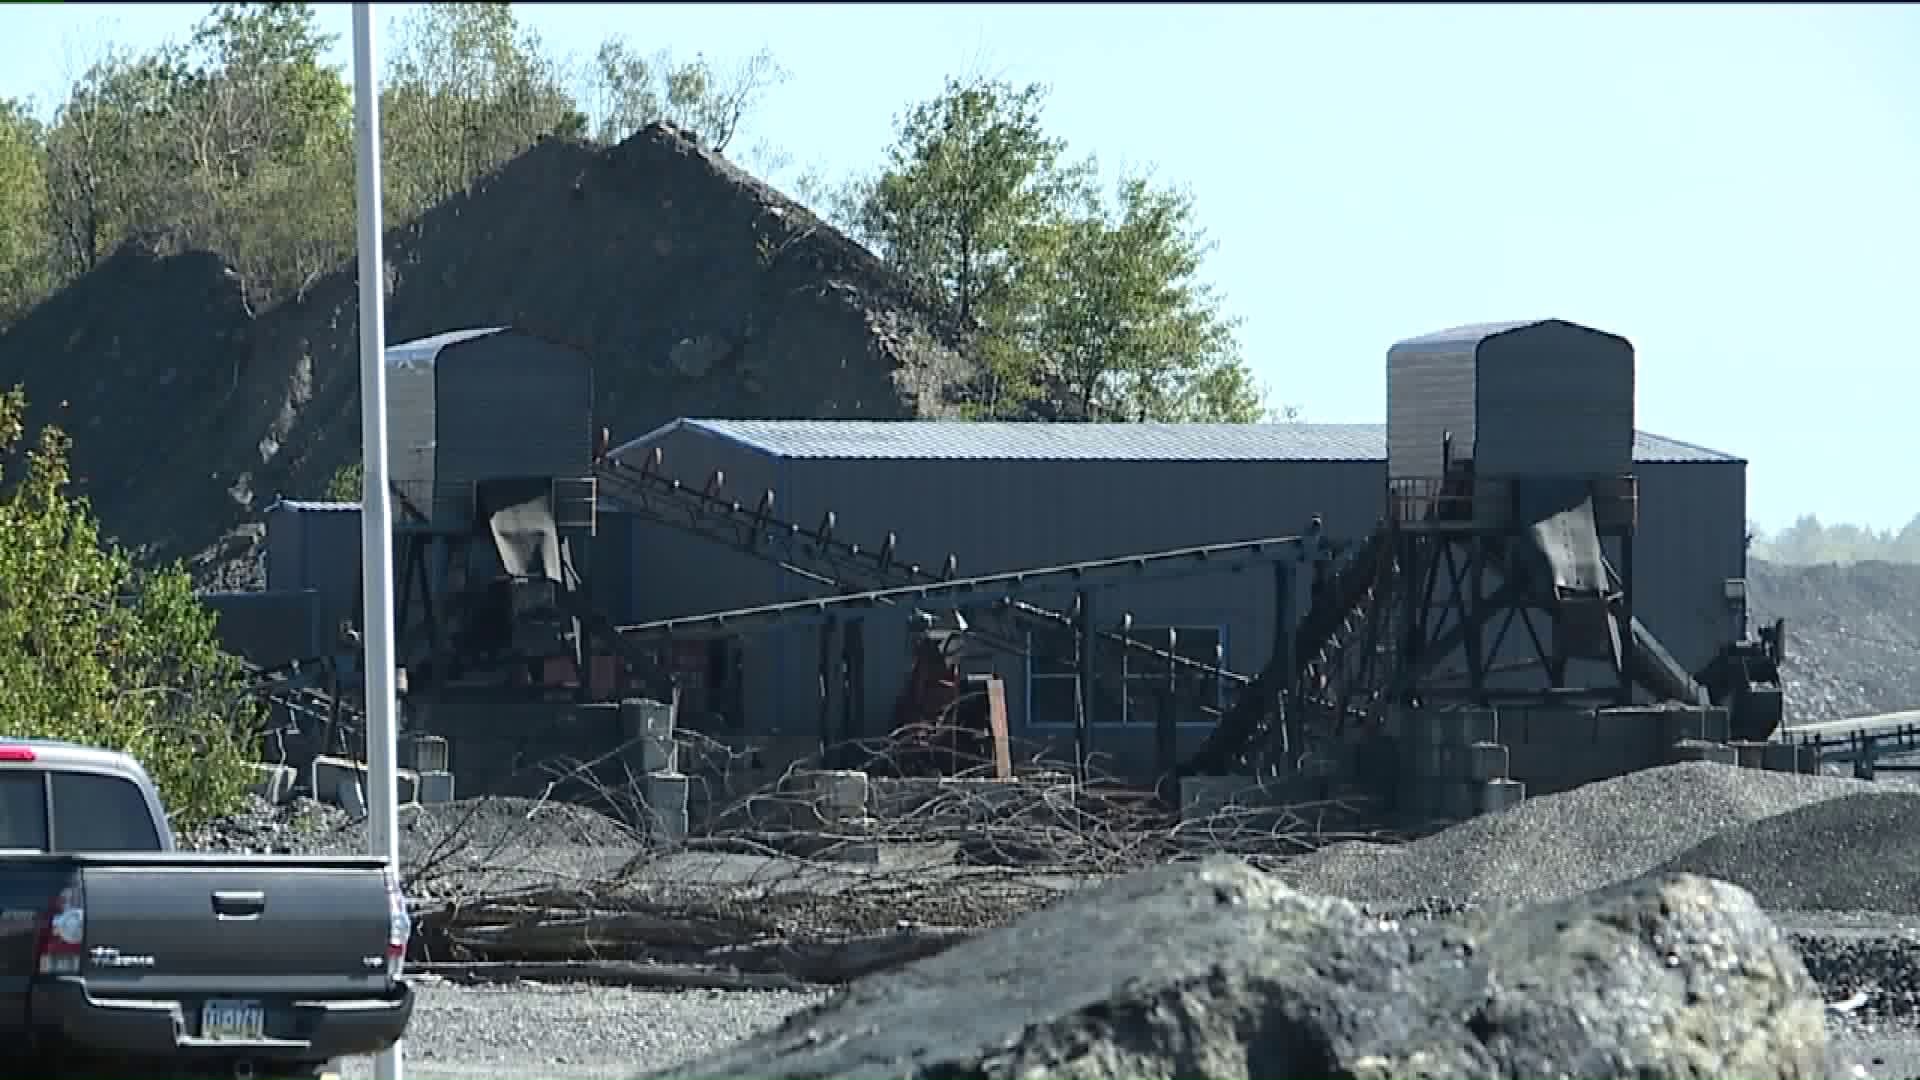 Politicians Visit Luzerne County Coal Mine